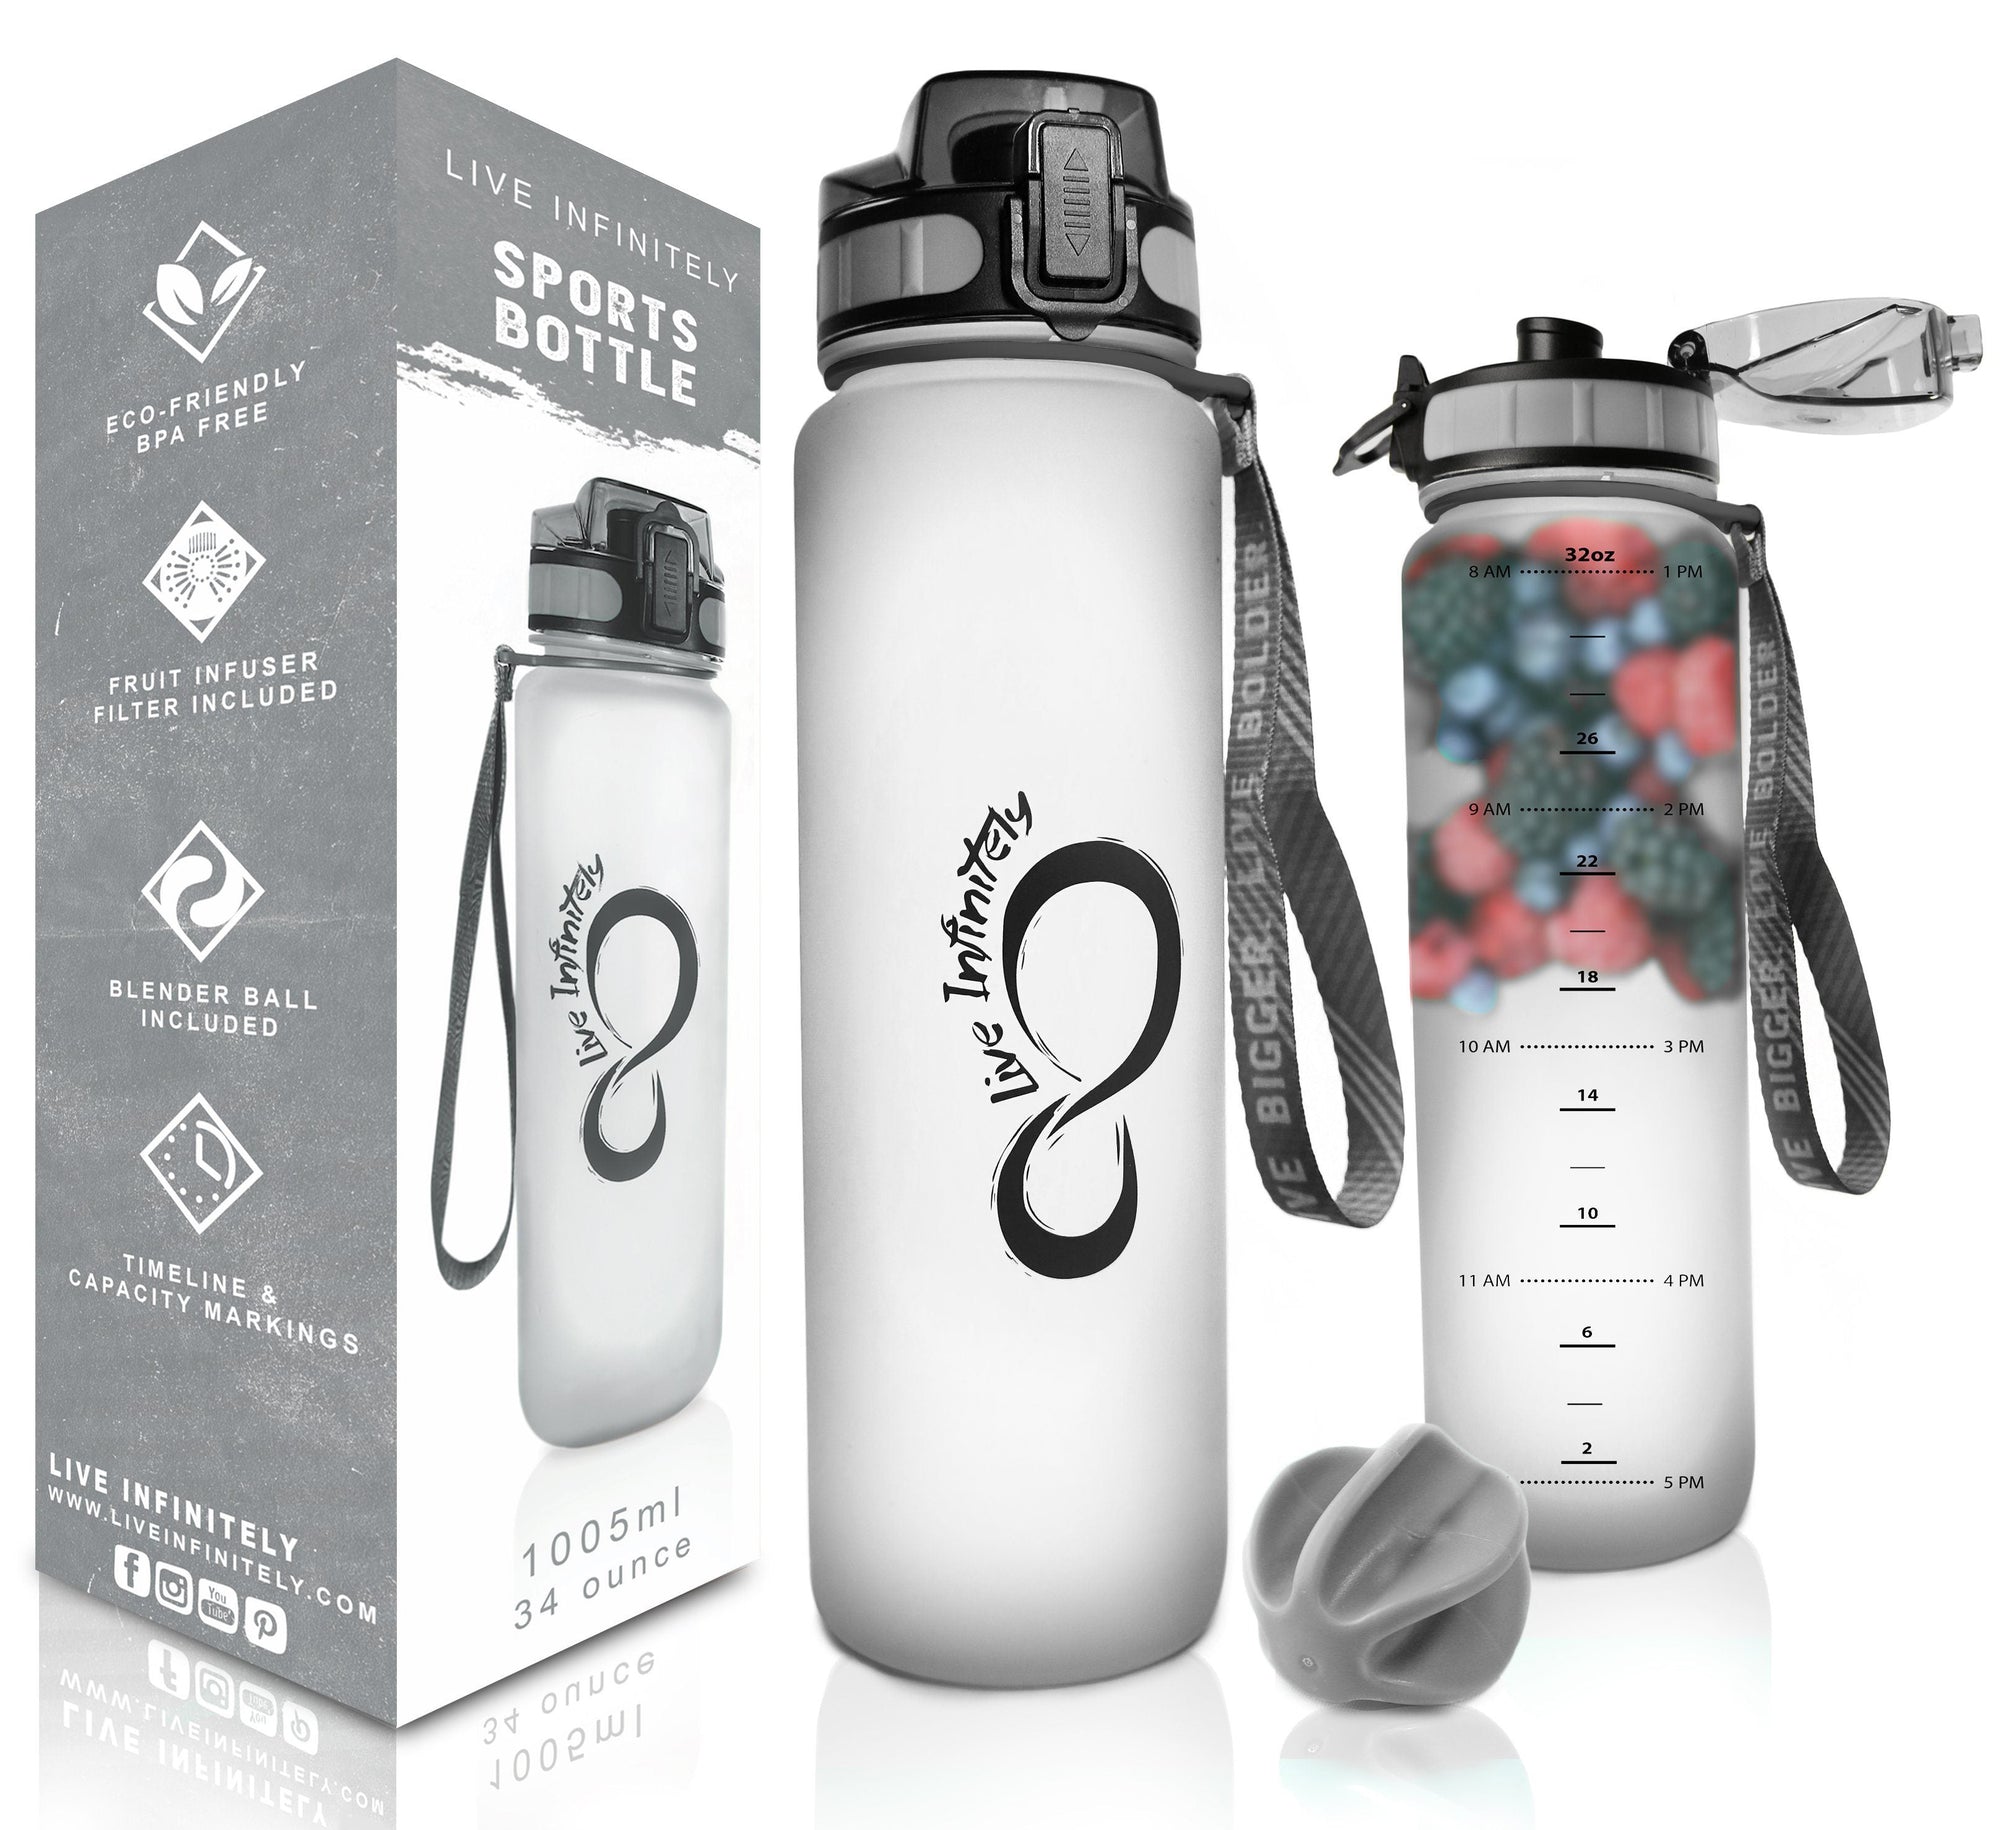 Sport Water Bottle with Timeline Markings & Fruit Infuser - 34oz High Flow Sports Water Bottle by Live Infinitely, Rose Gold